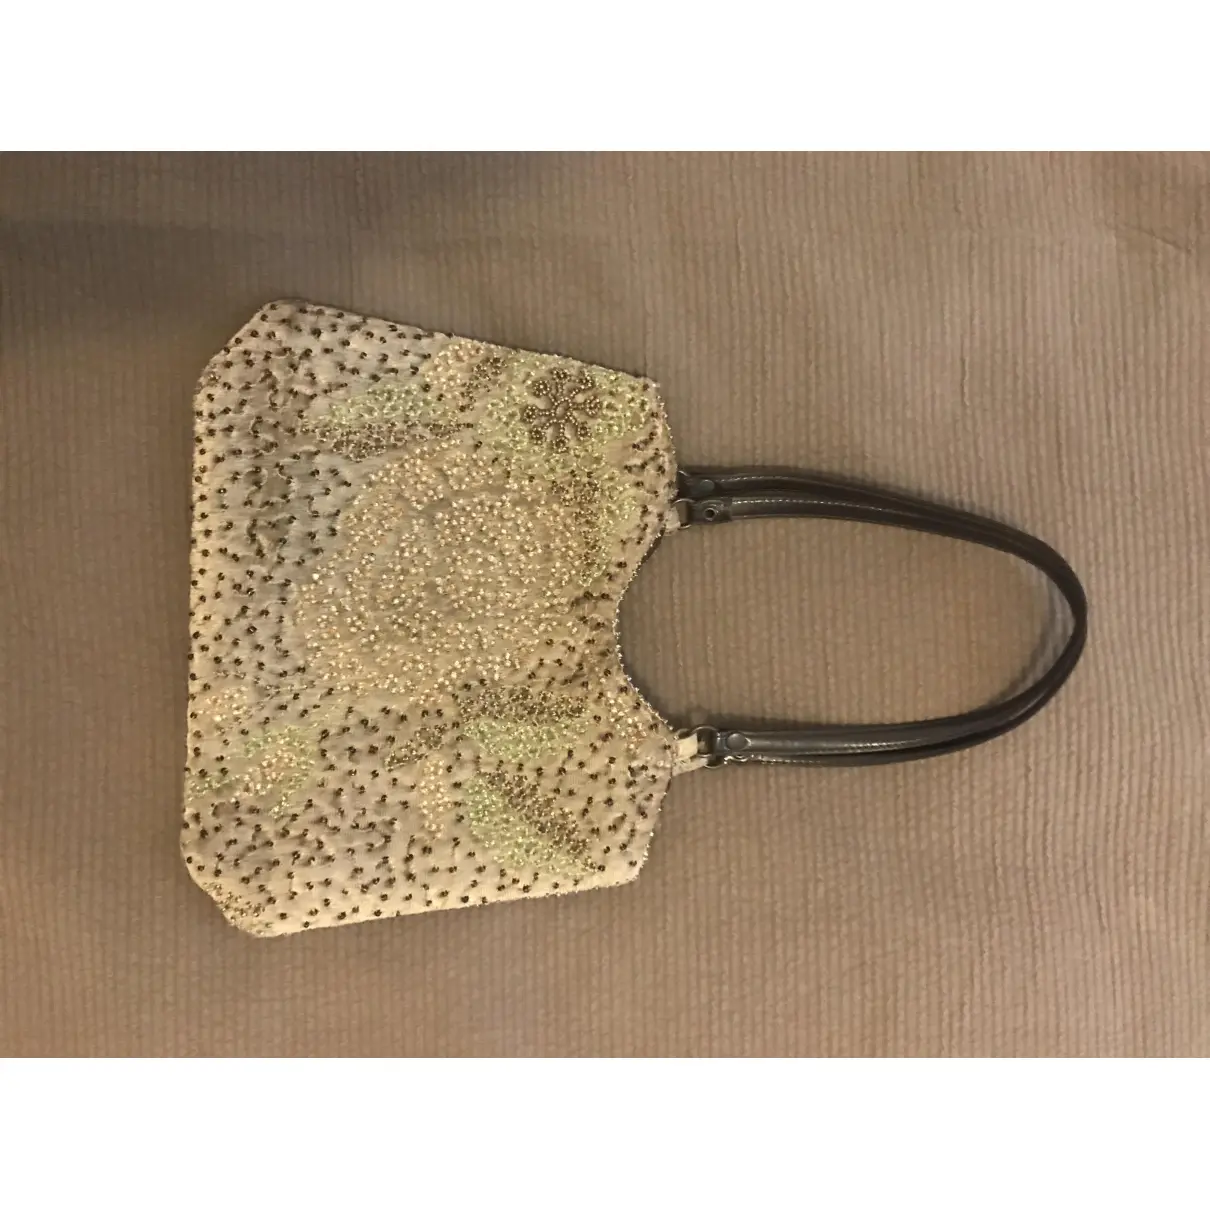 Buy Jamin Puech Velvet handbag online